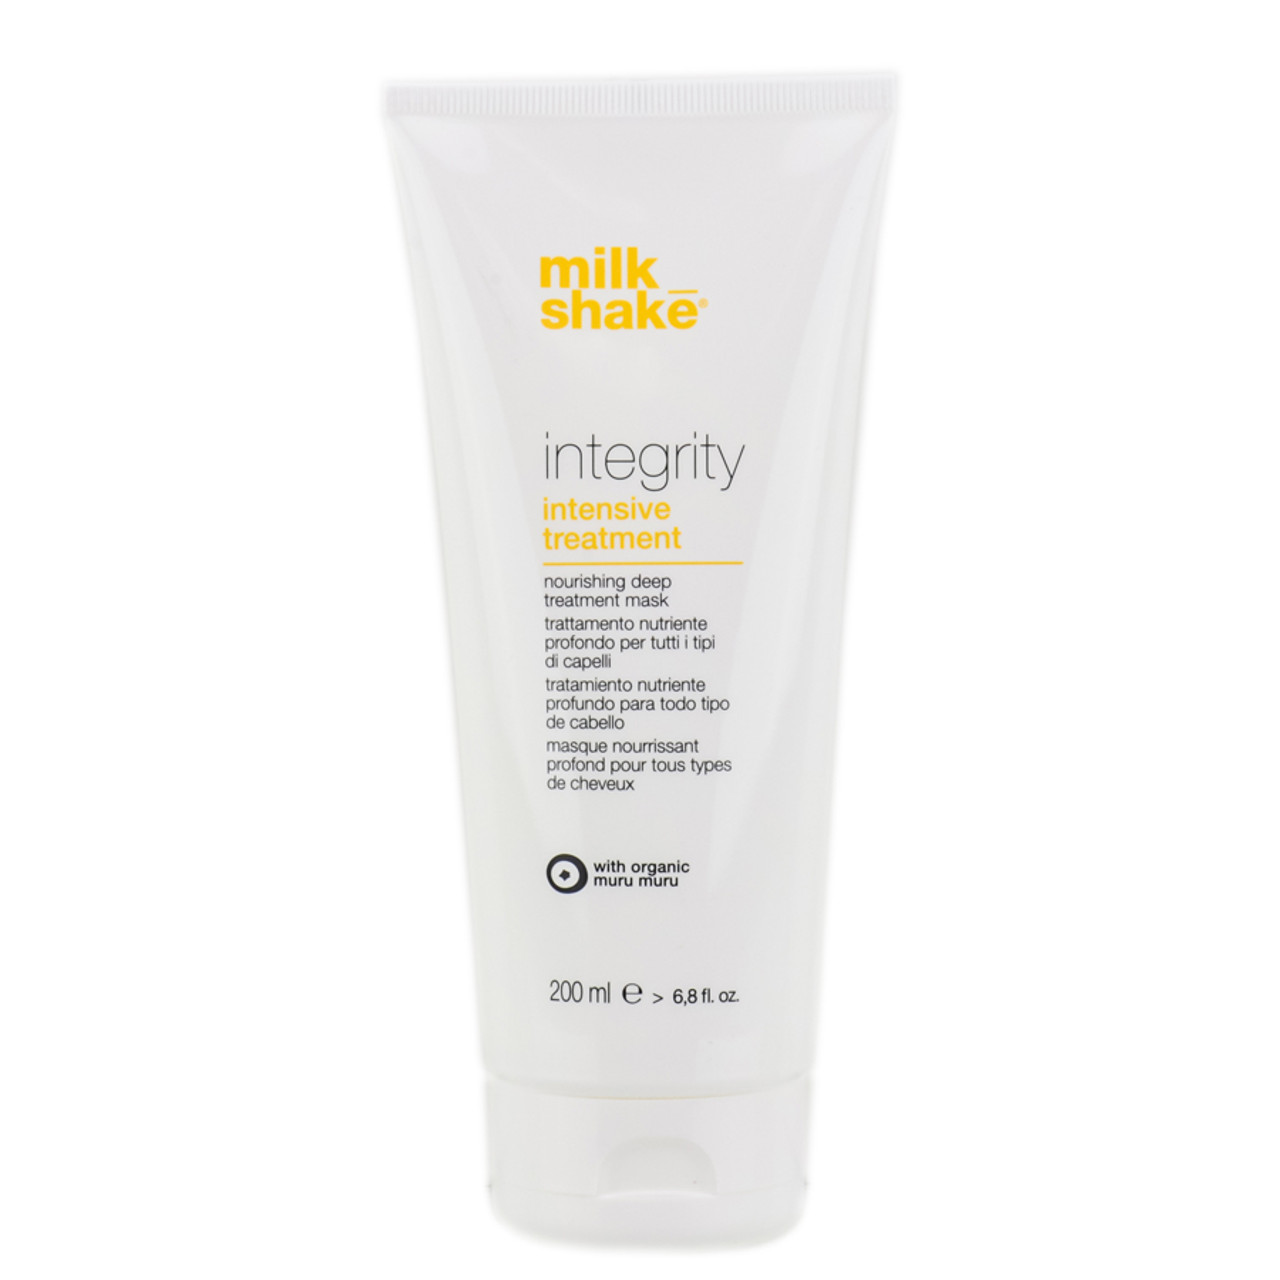 Milkshake Integrity Intensive Treatment